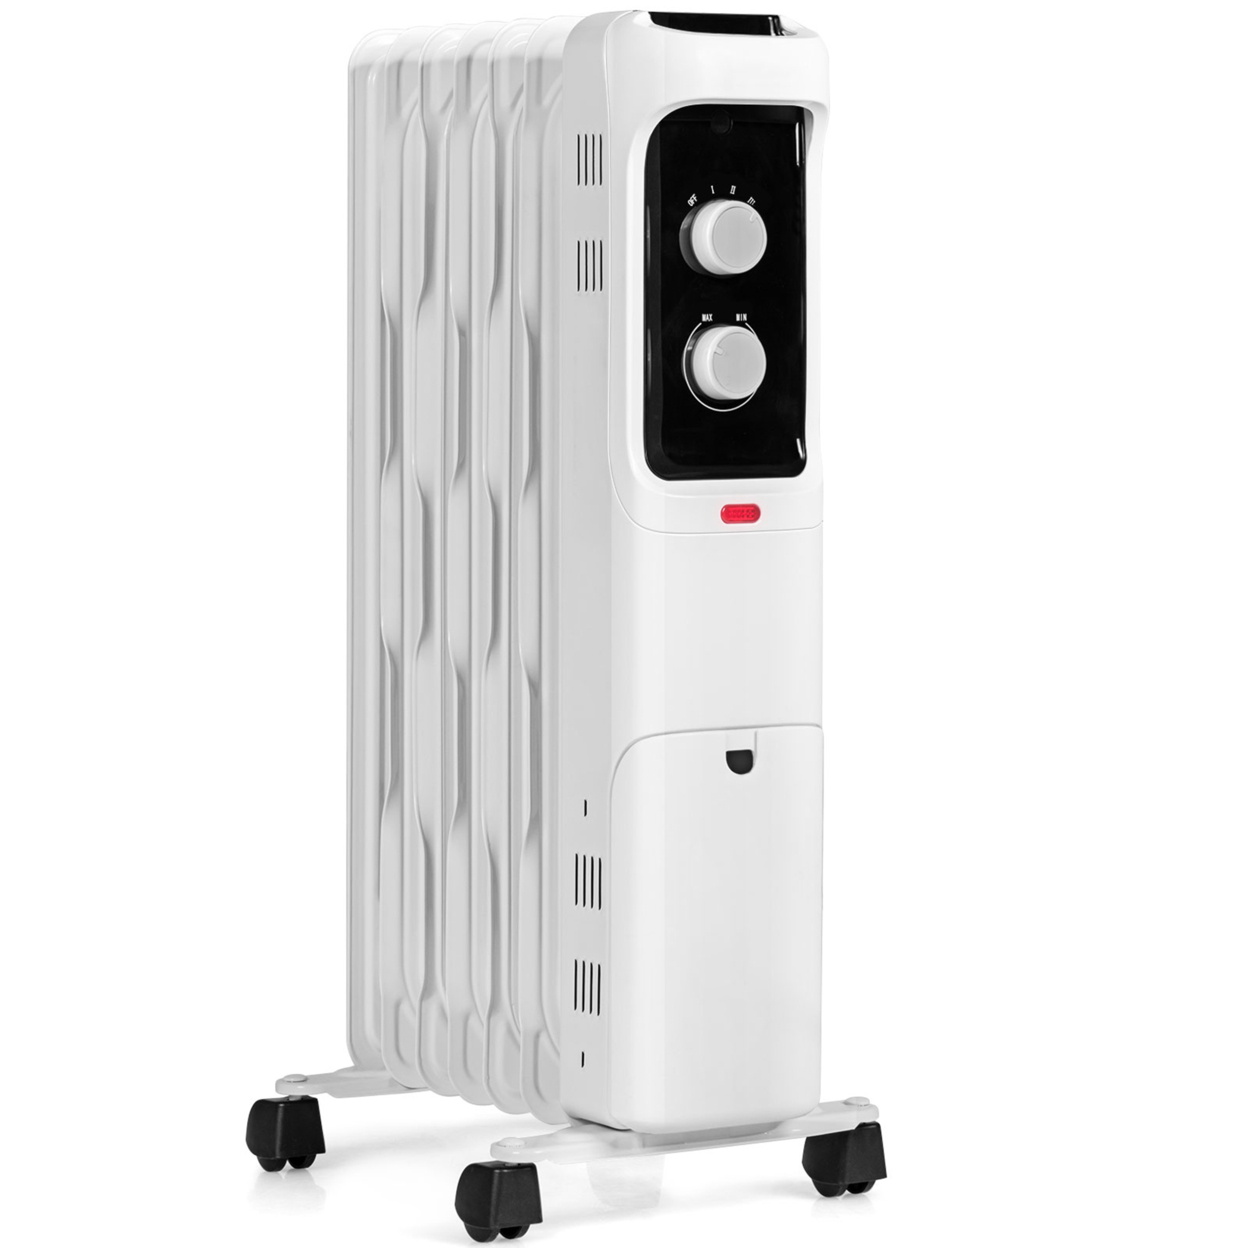 1500W Oil Filled Radiator Heater Space Heater W/ 3 Heat Settings Black/White - White